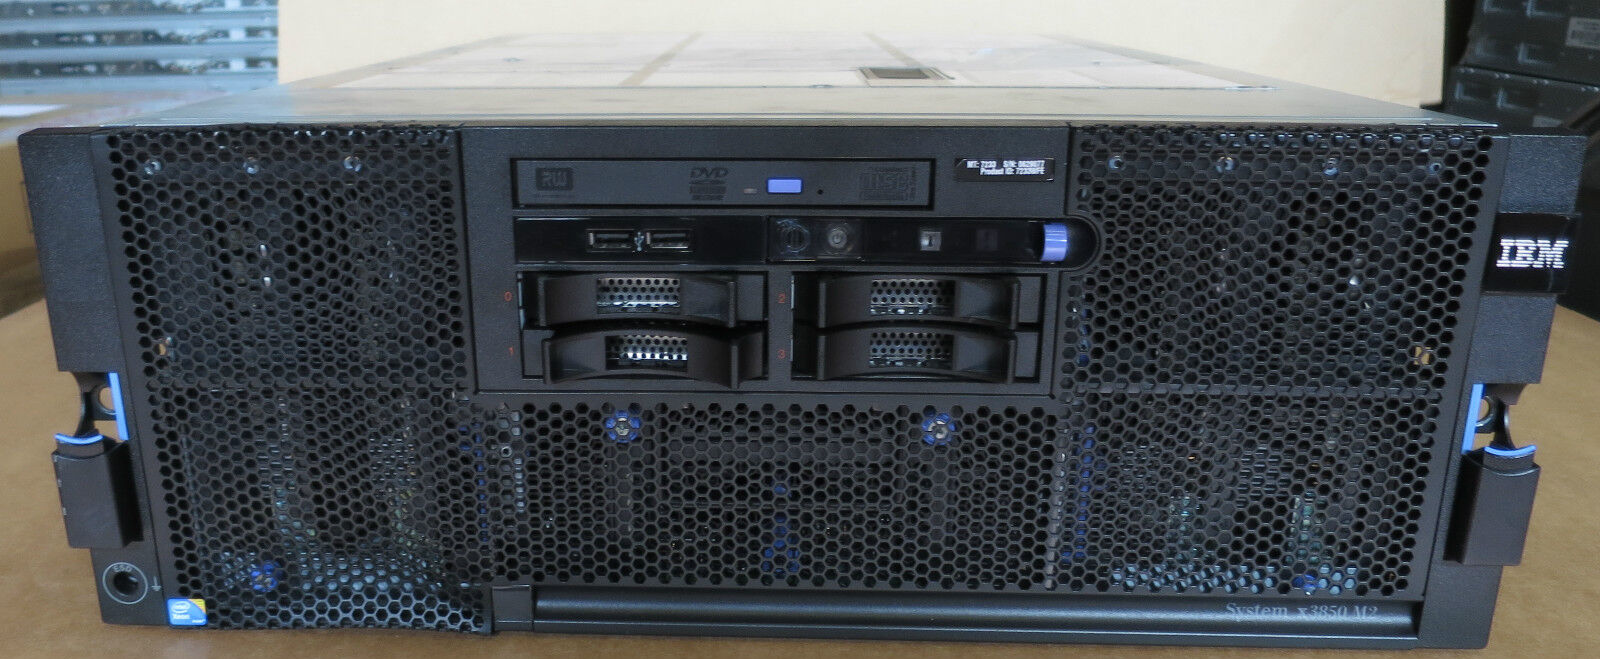 IBM X3850 M2 4 x SIX-CORE XEON E7450 2.4GHz 64GB RAM 4 x 72Gb Rack Mount Server